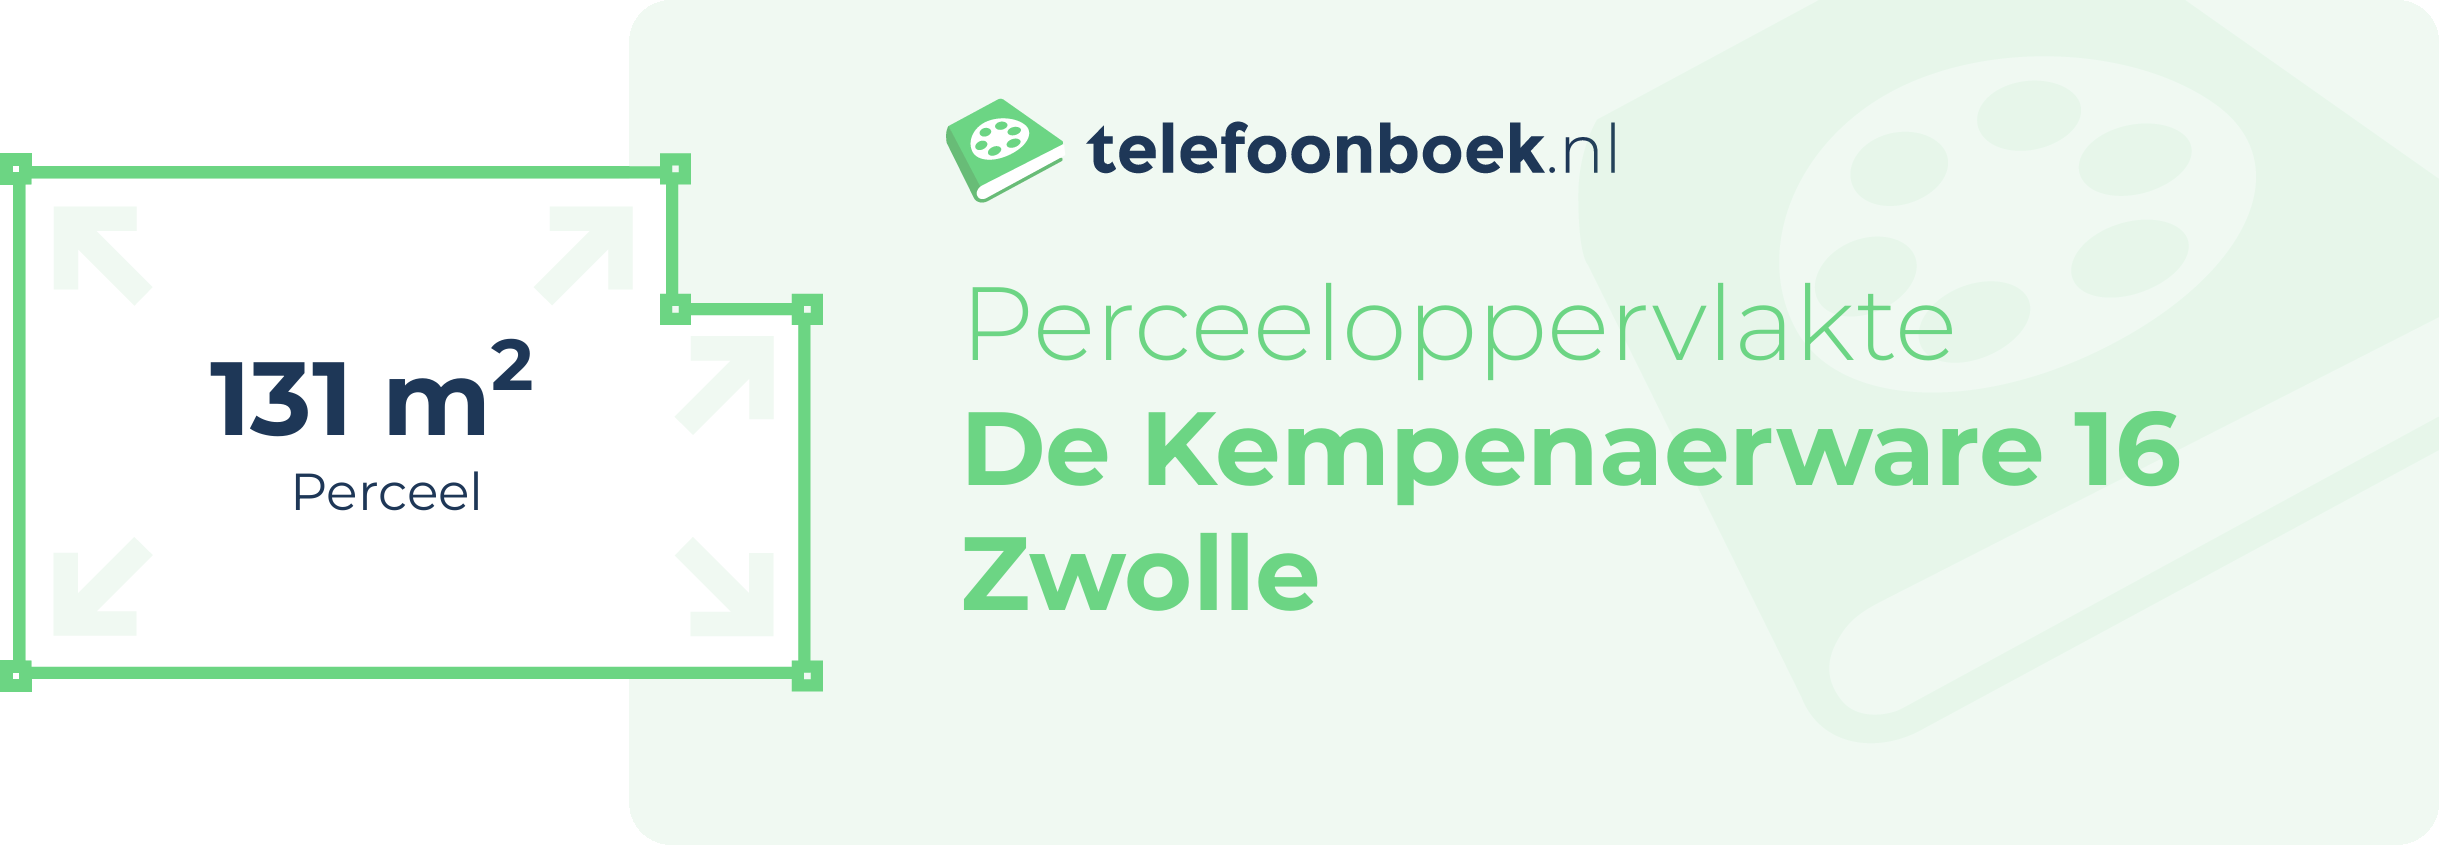 Perceeloppervlakte De Kempenaerware 16 Zwolle